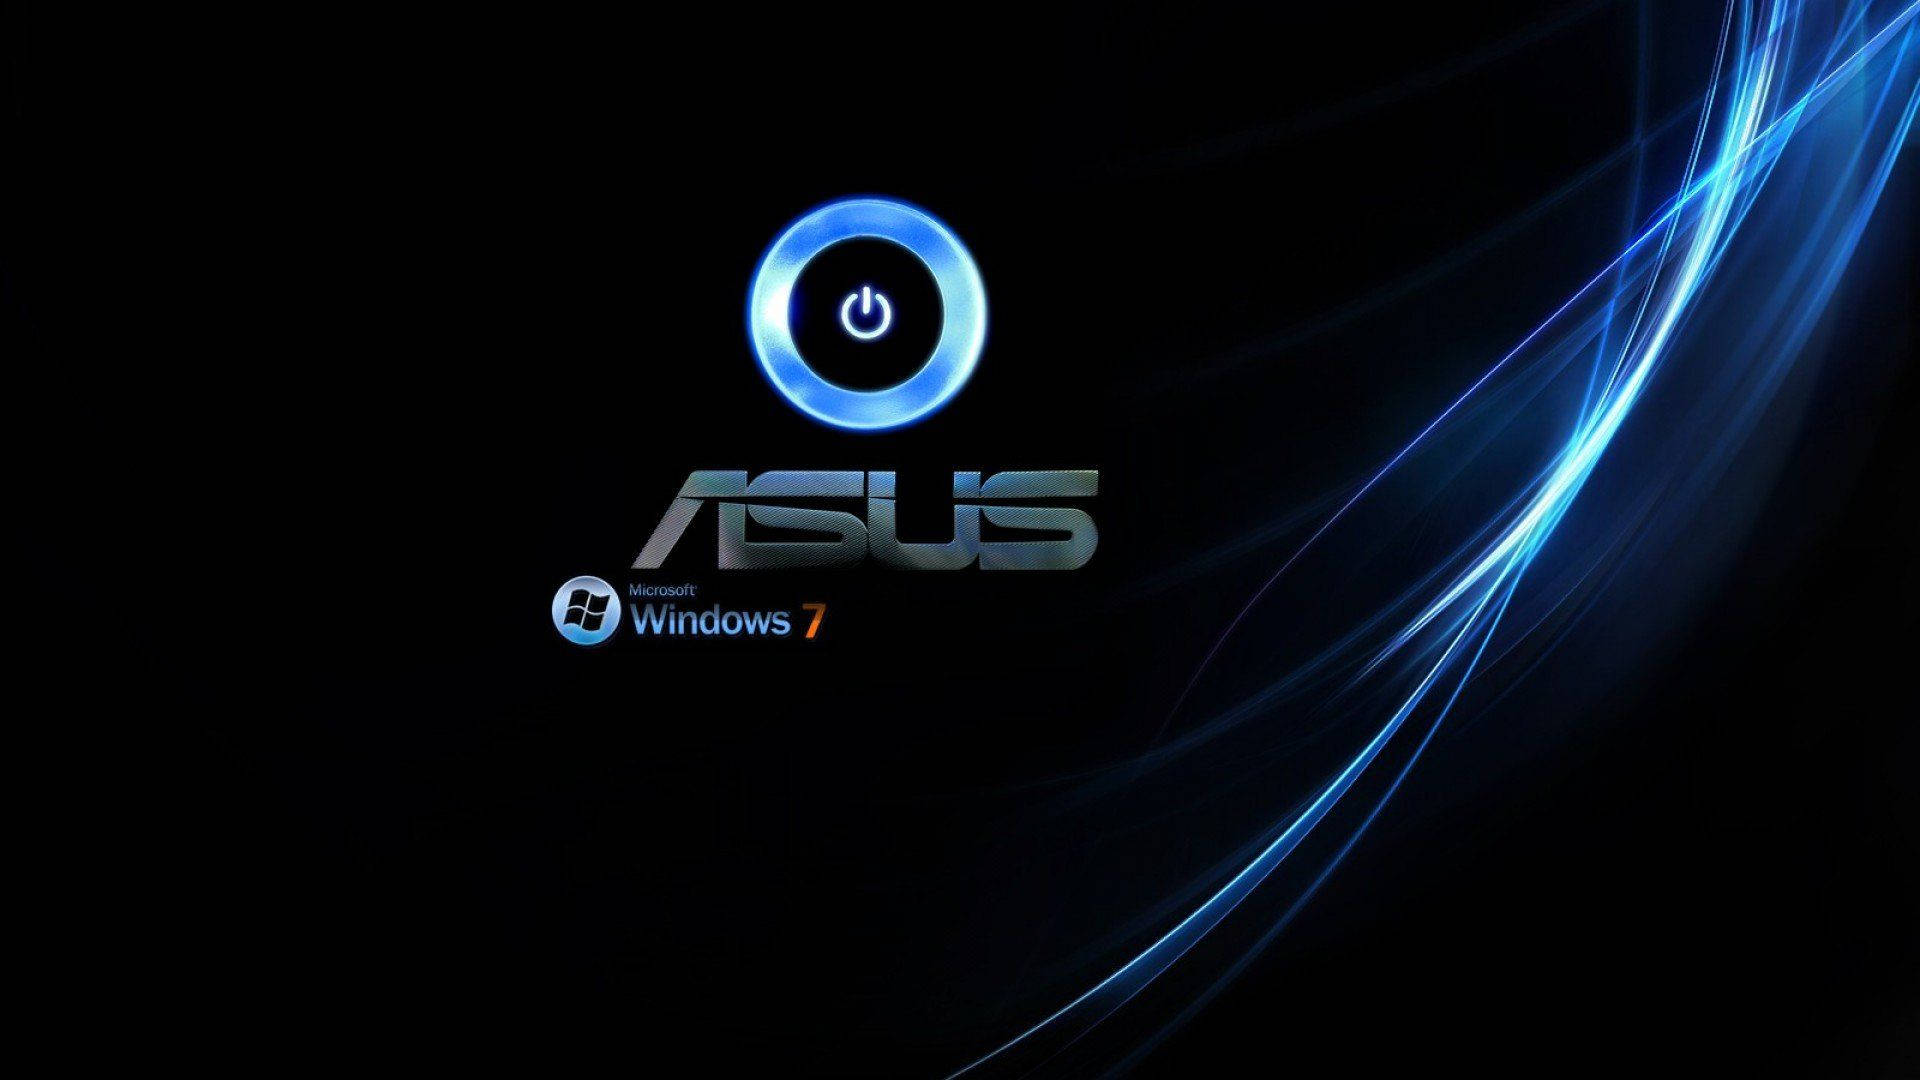 Asus Windows 7 Blue Background